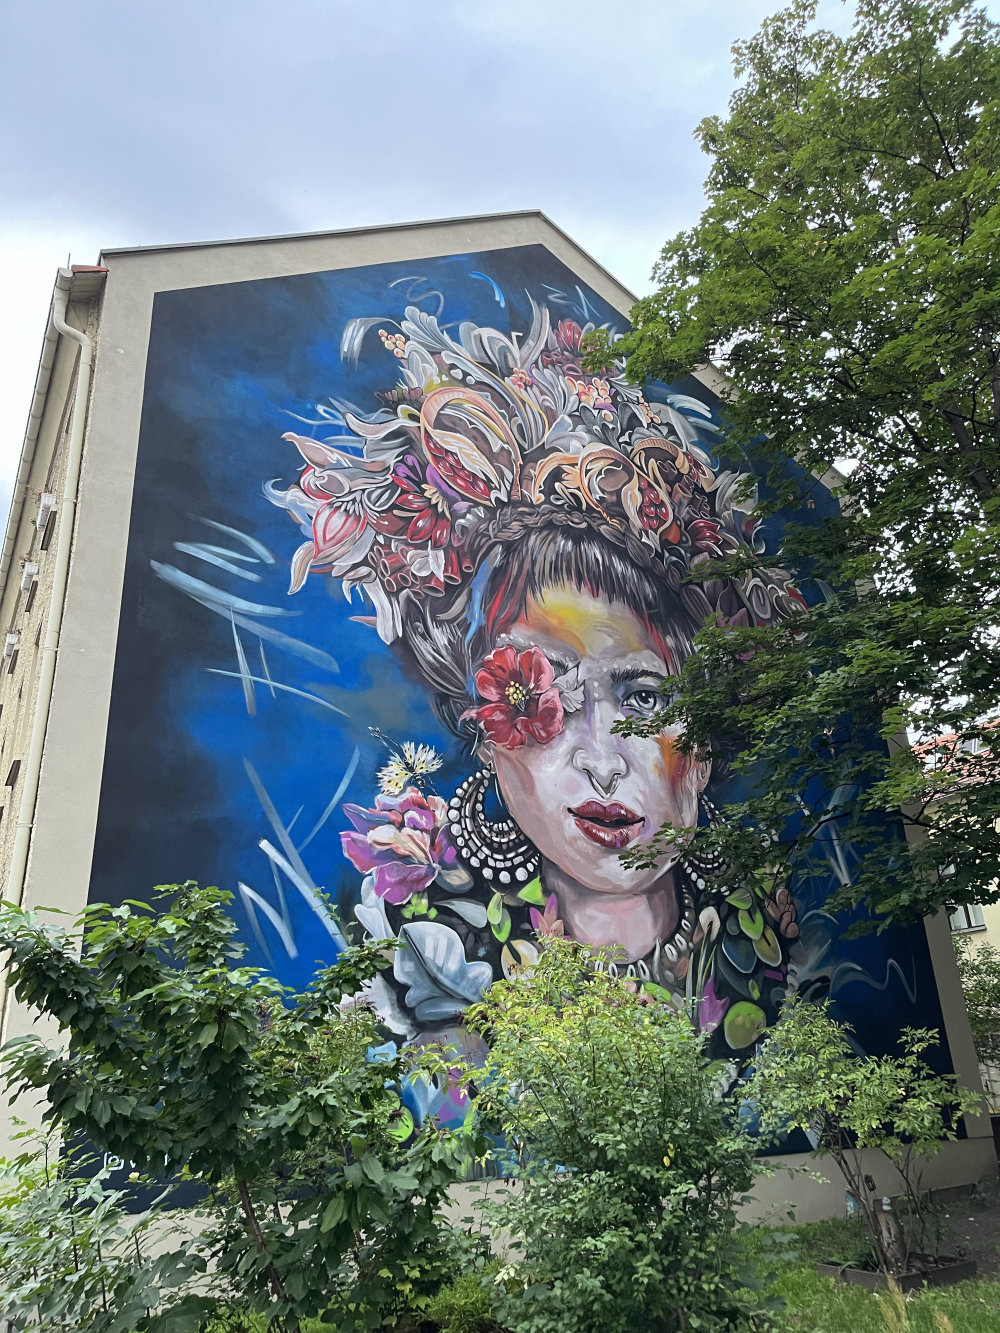 mural in Berlin by artist Wanda Stang.